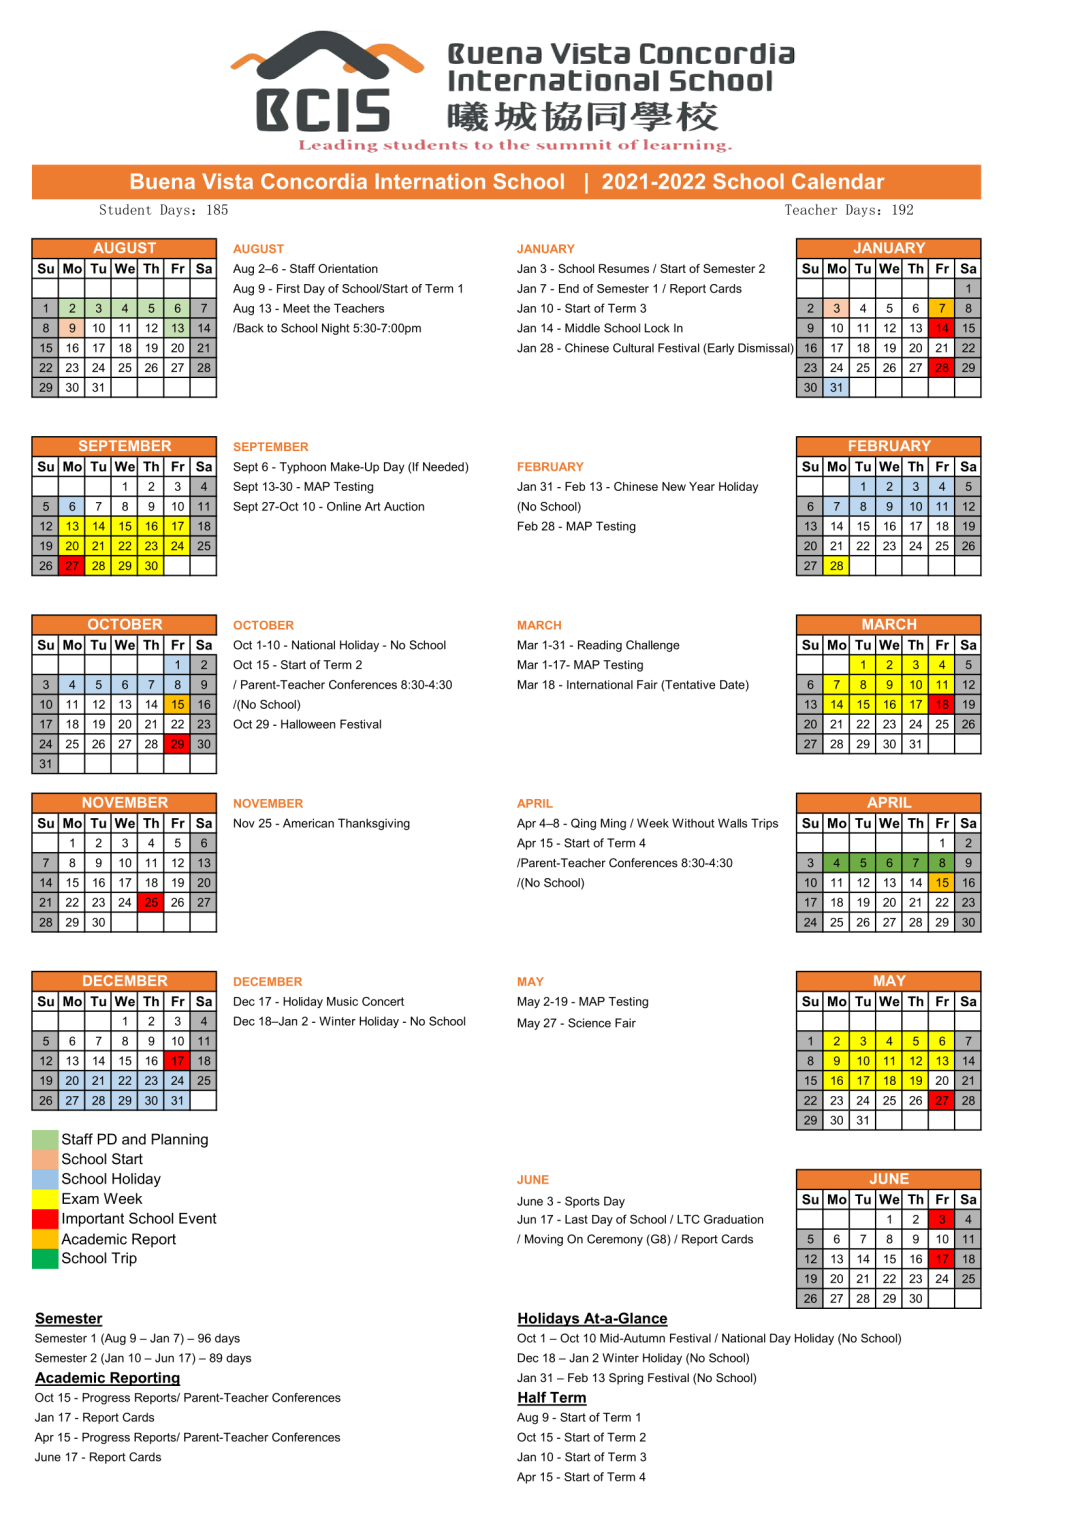 BCIS曦城协同2021-2022学年度校历 | BCIS School Calendar - 2021-2022